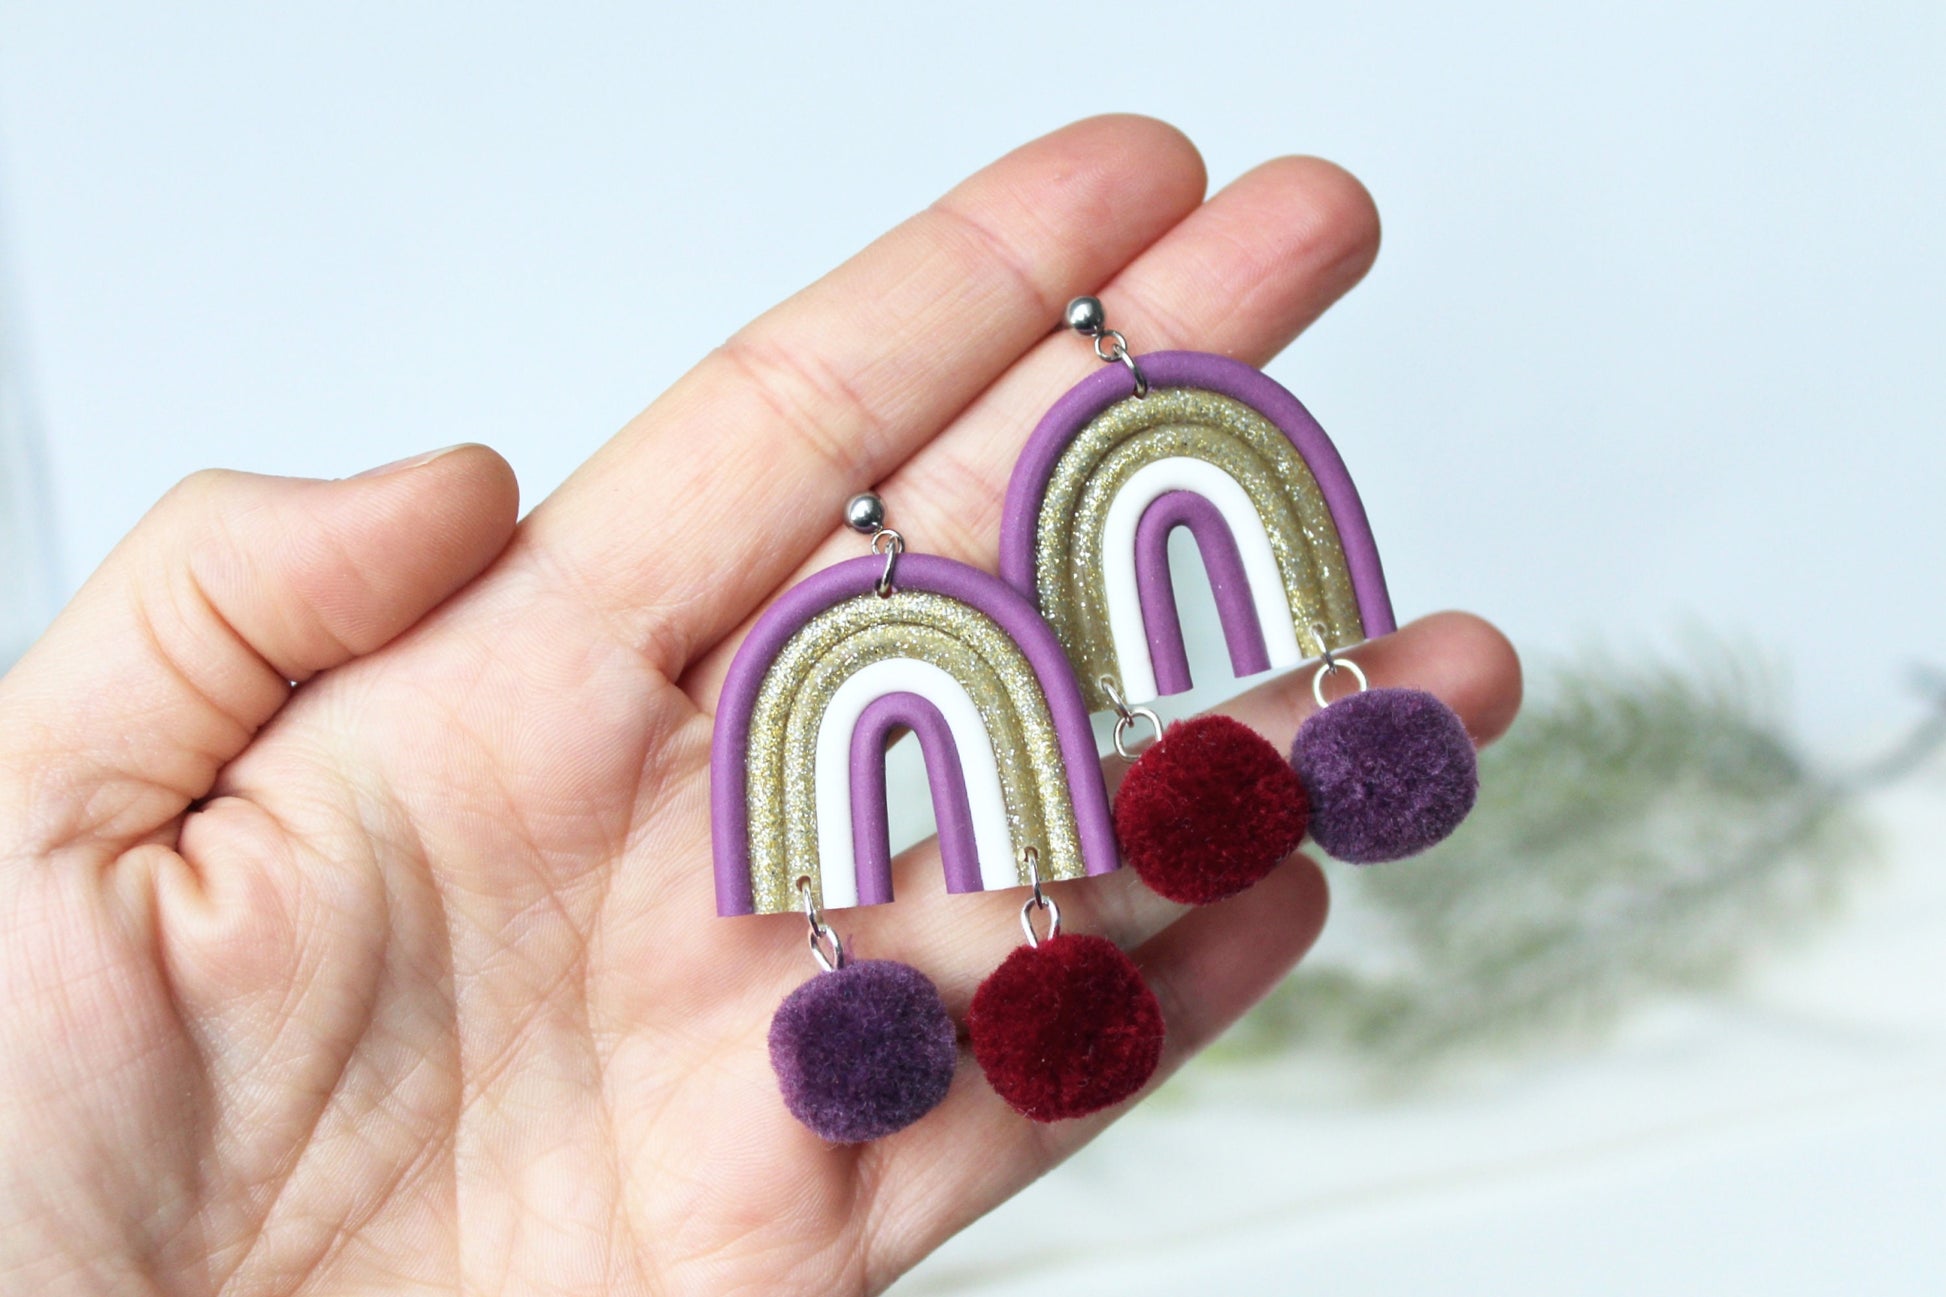 Rainbow Earrings, Christmas Earrings, Dangle Earrings, Pompon Earrings, Polymer Clay Earrings, Holiday Earrings, Handmade, Green, Purple